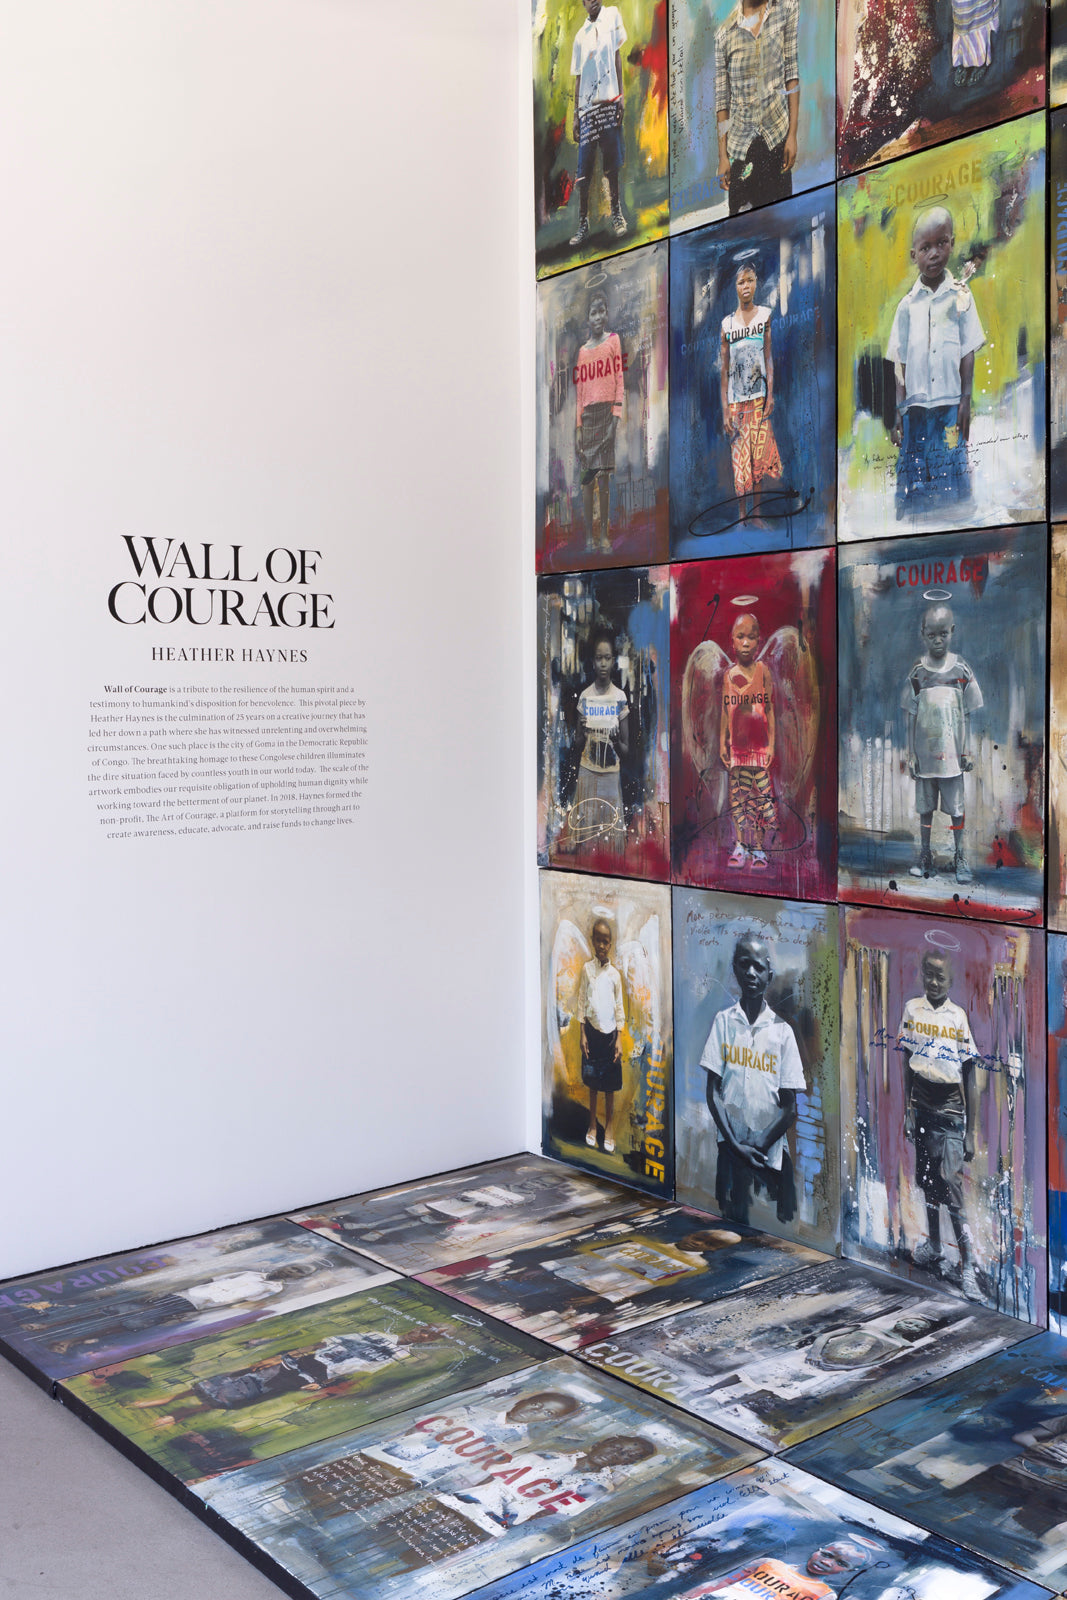 Wall of Courage: Benedicte